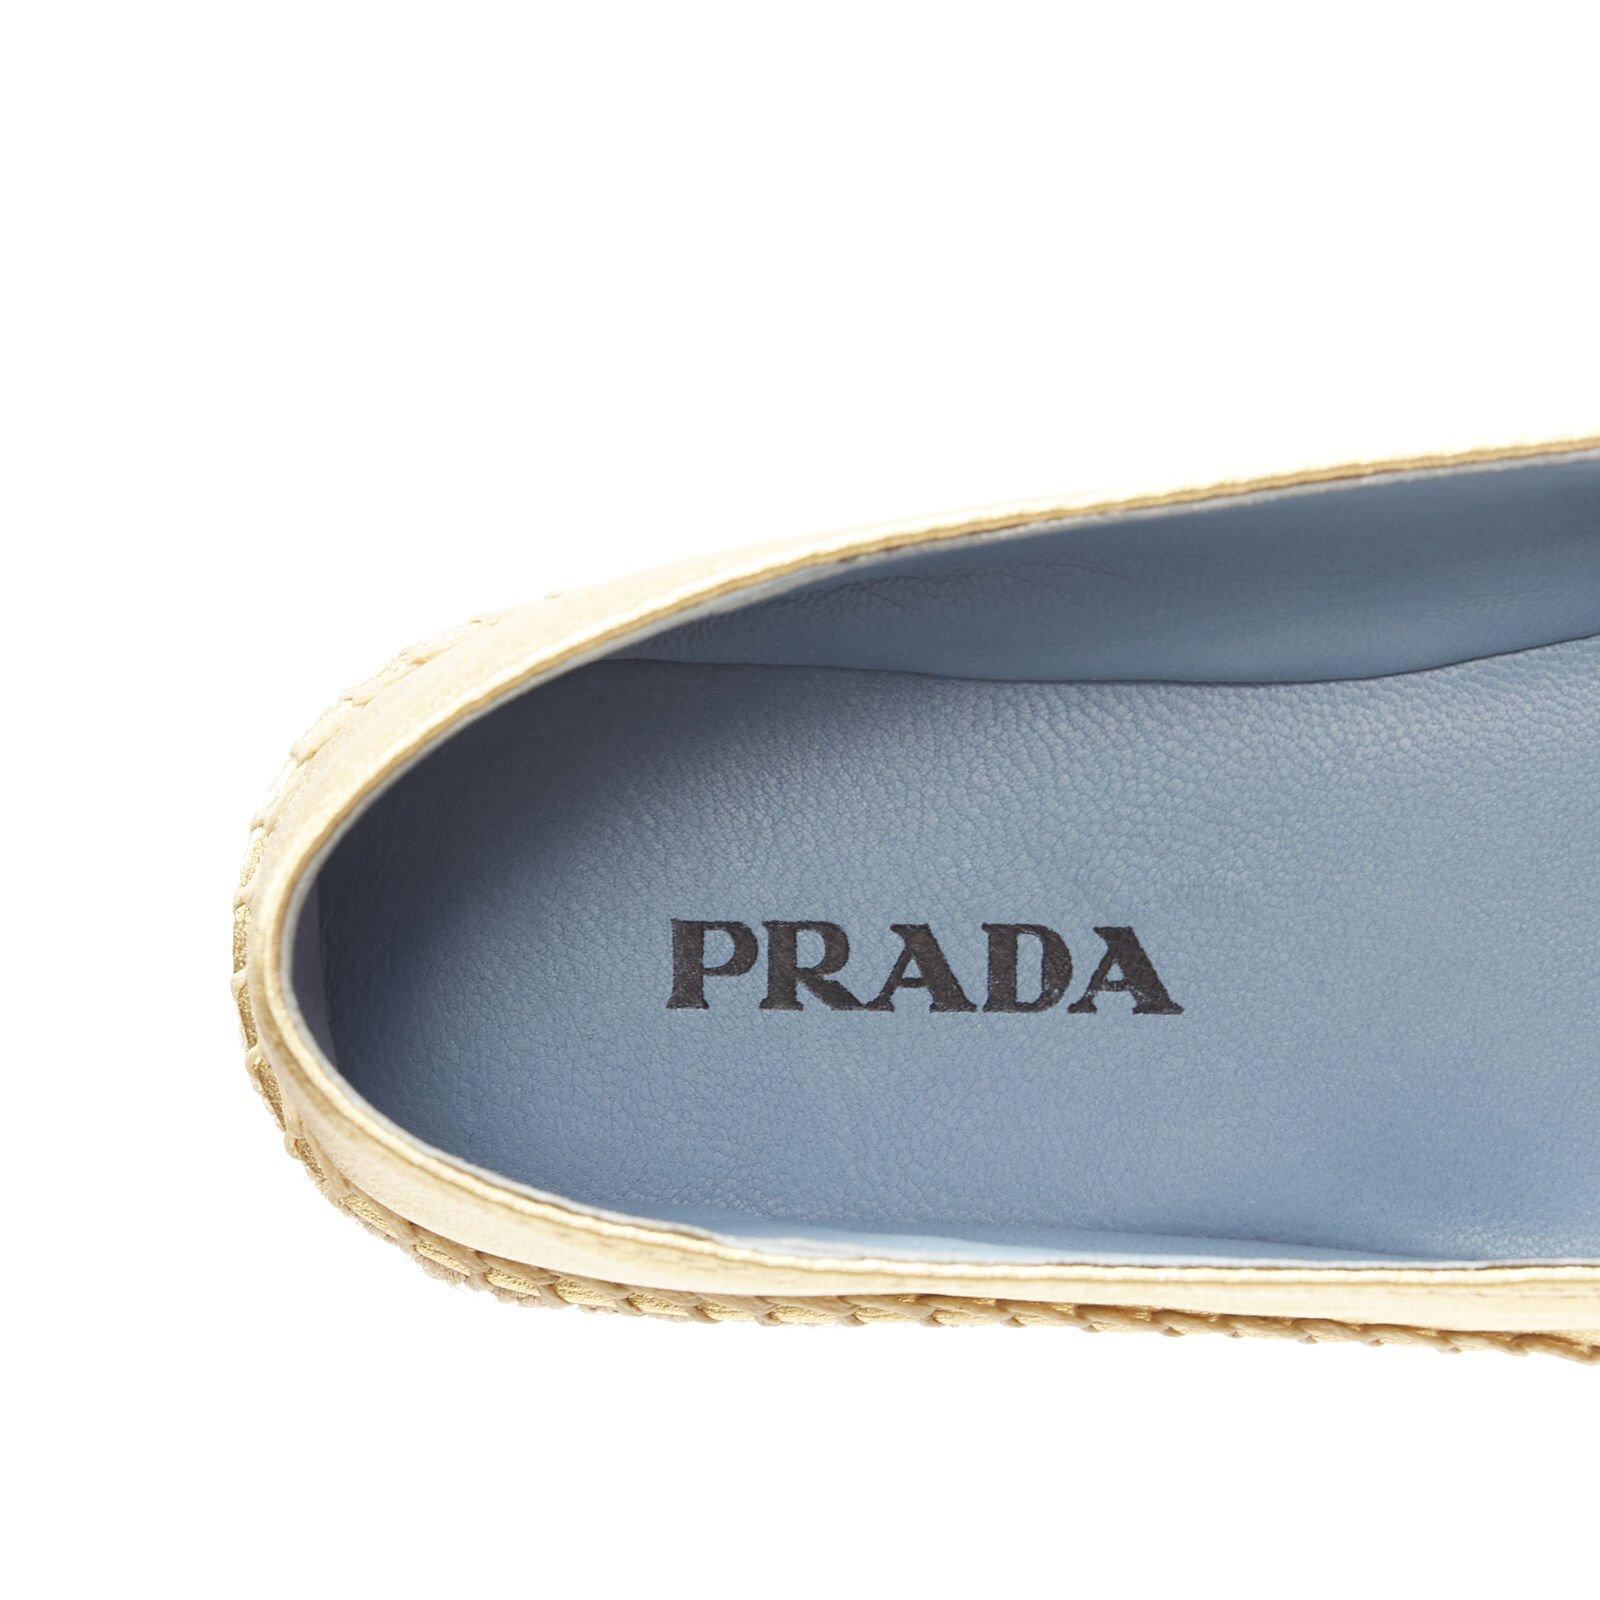 PRADA metallic gold leather logo peep toe jute platform espadrille shoe EU38 For Sale 6